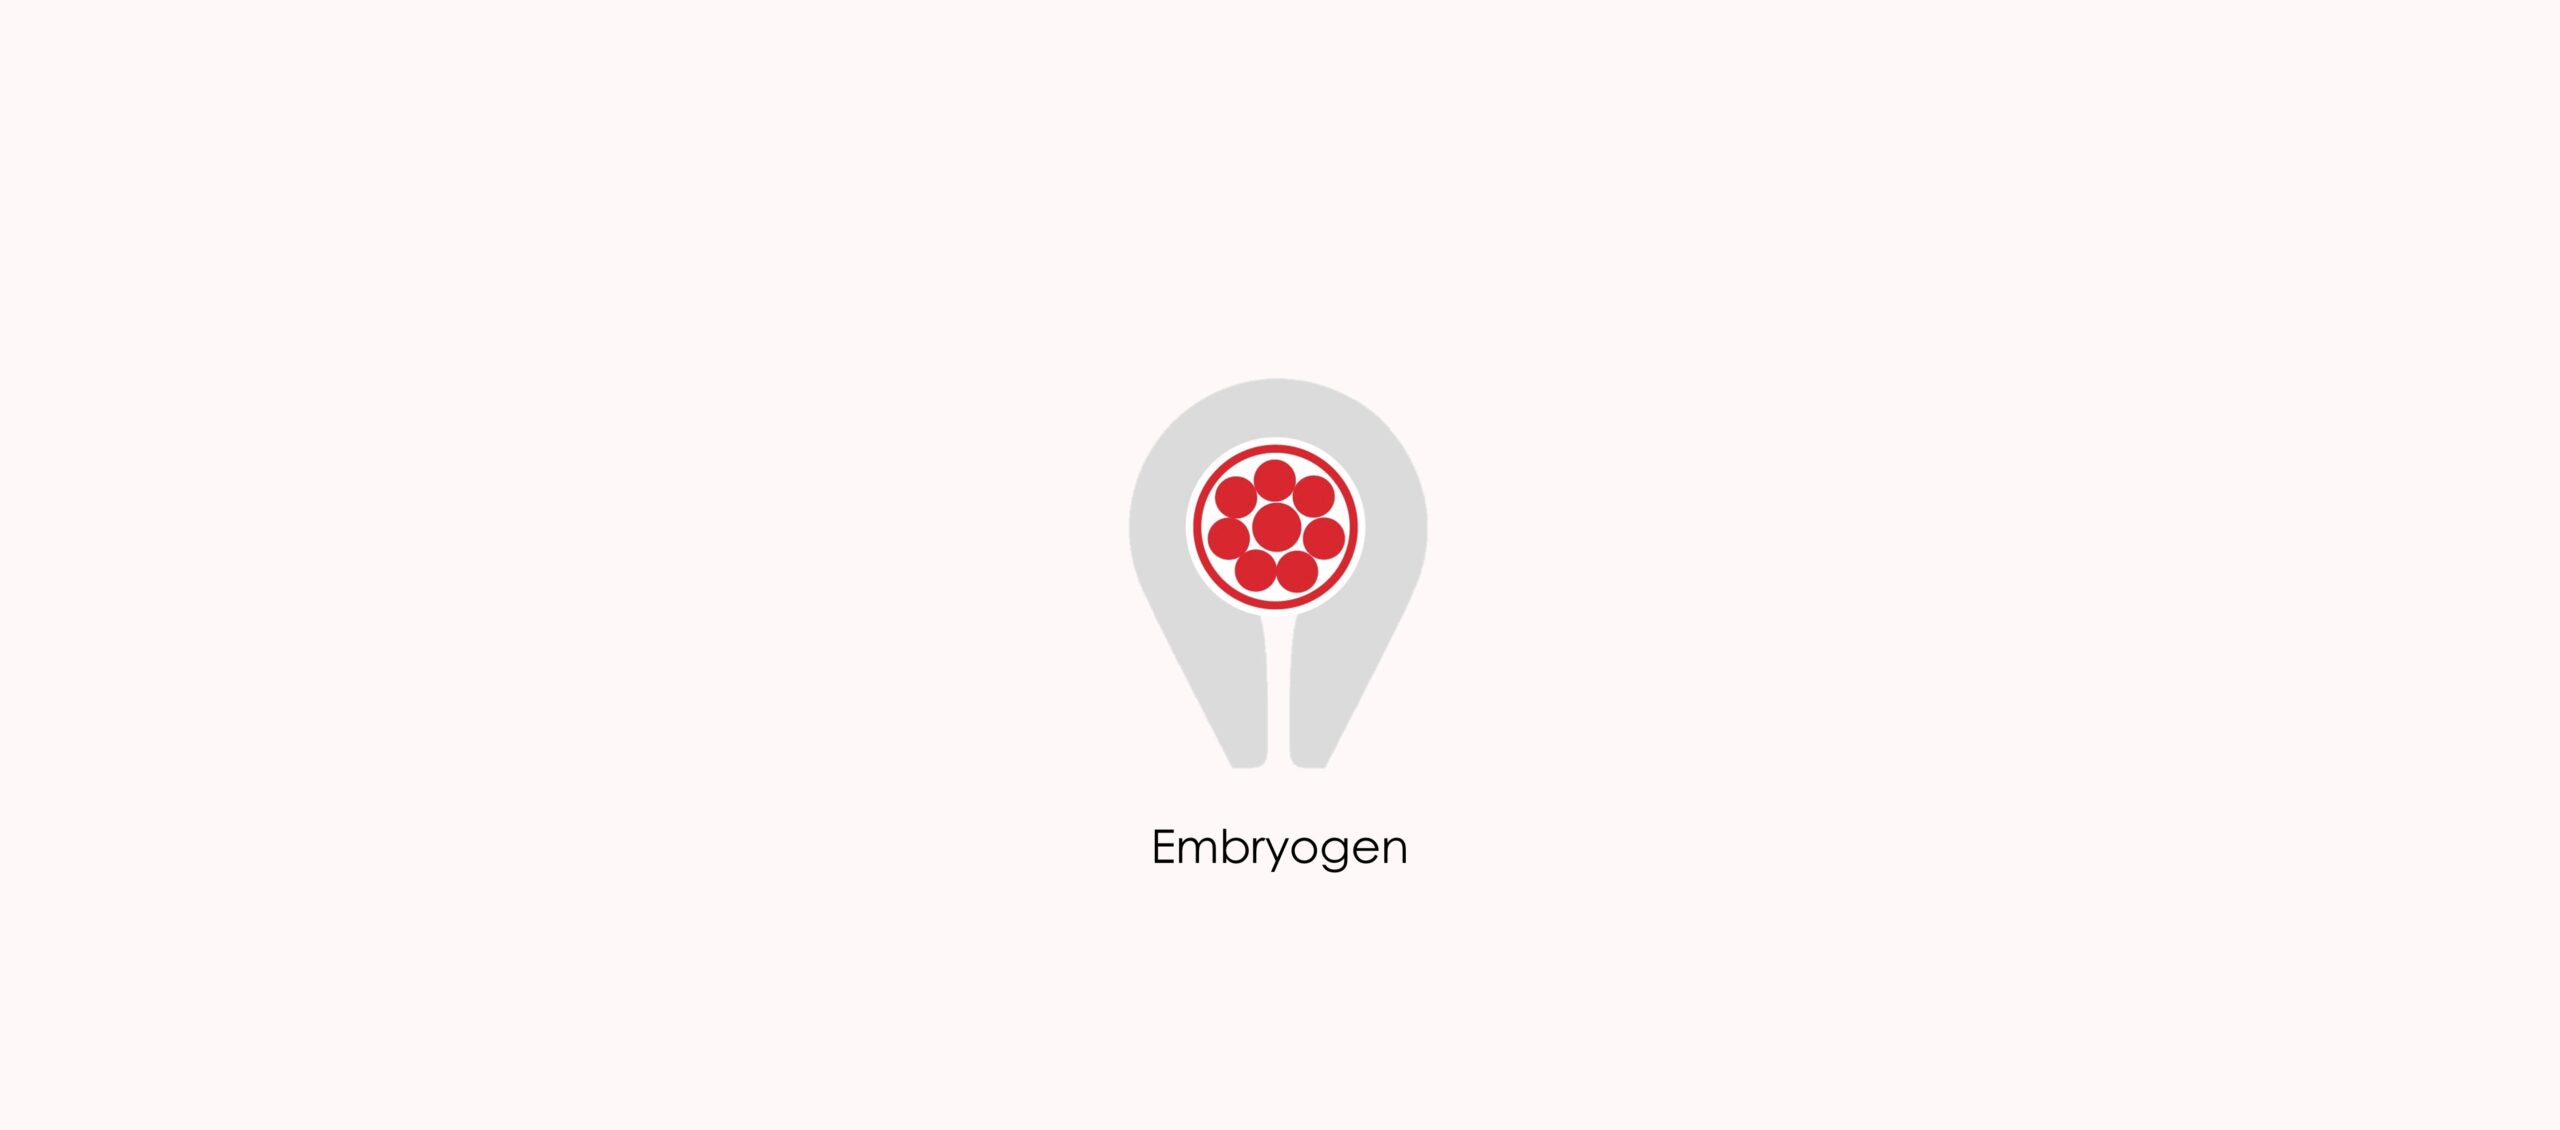 Embryogen